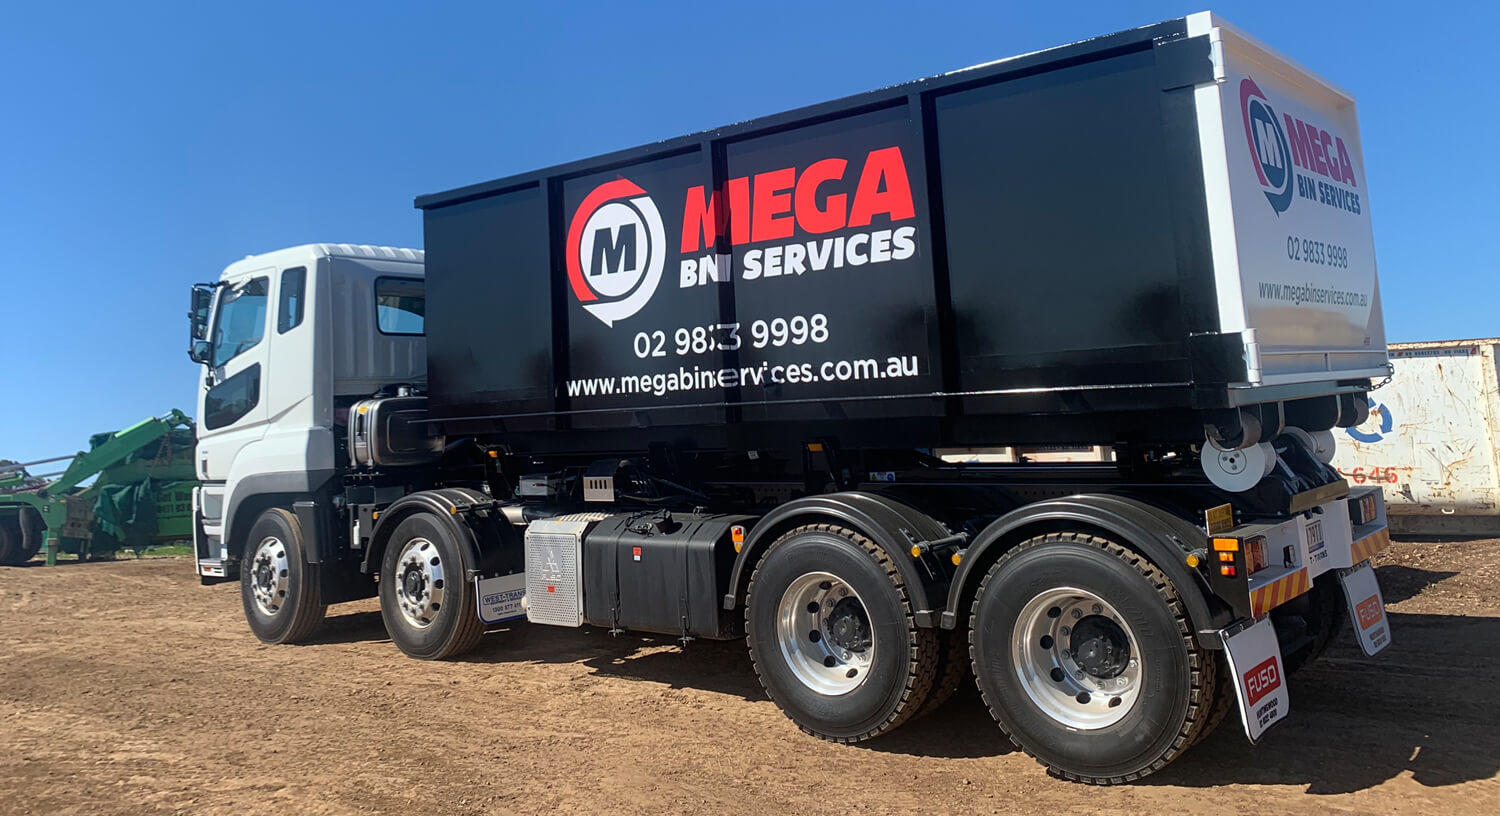 Mega Bin Services